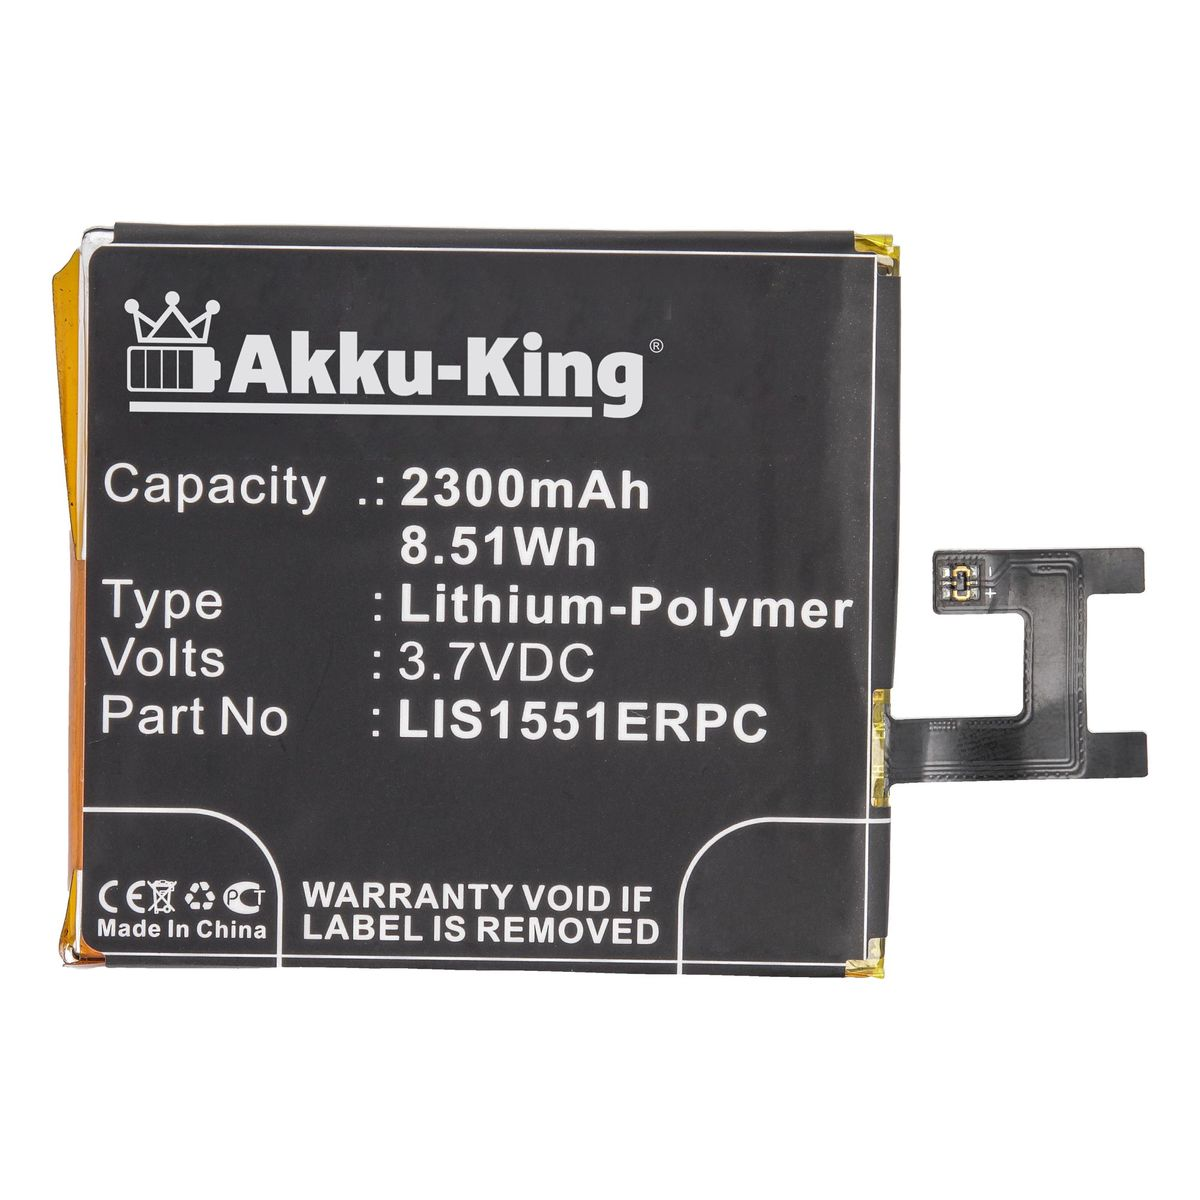 AKKU-KING Akku Handy-Akku, kompatibel Li-Polymer 3.7 Sony LIS1551ERPC 2300mAh mit Volt